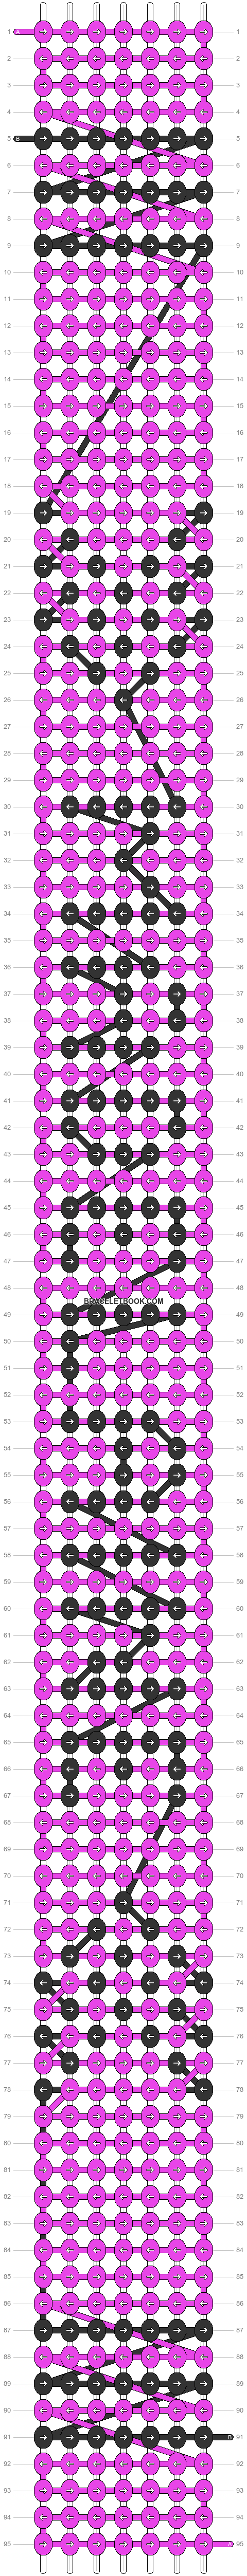 Alpha pattern #21510 variation #44919 pattern